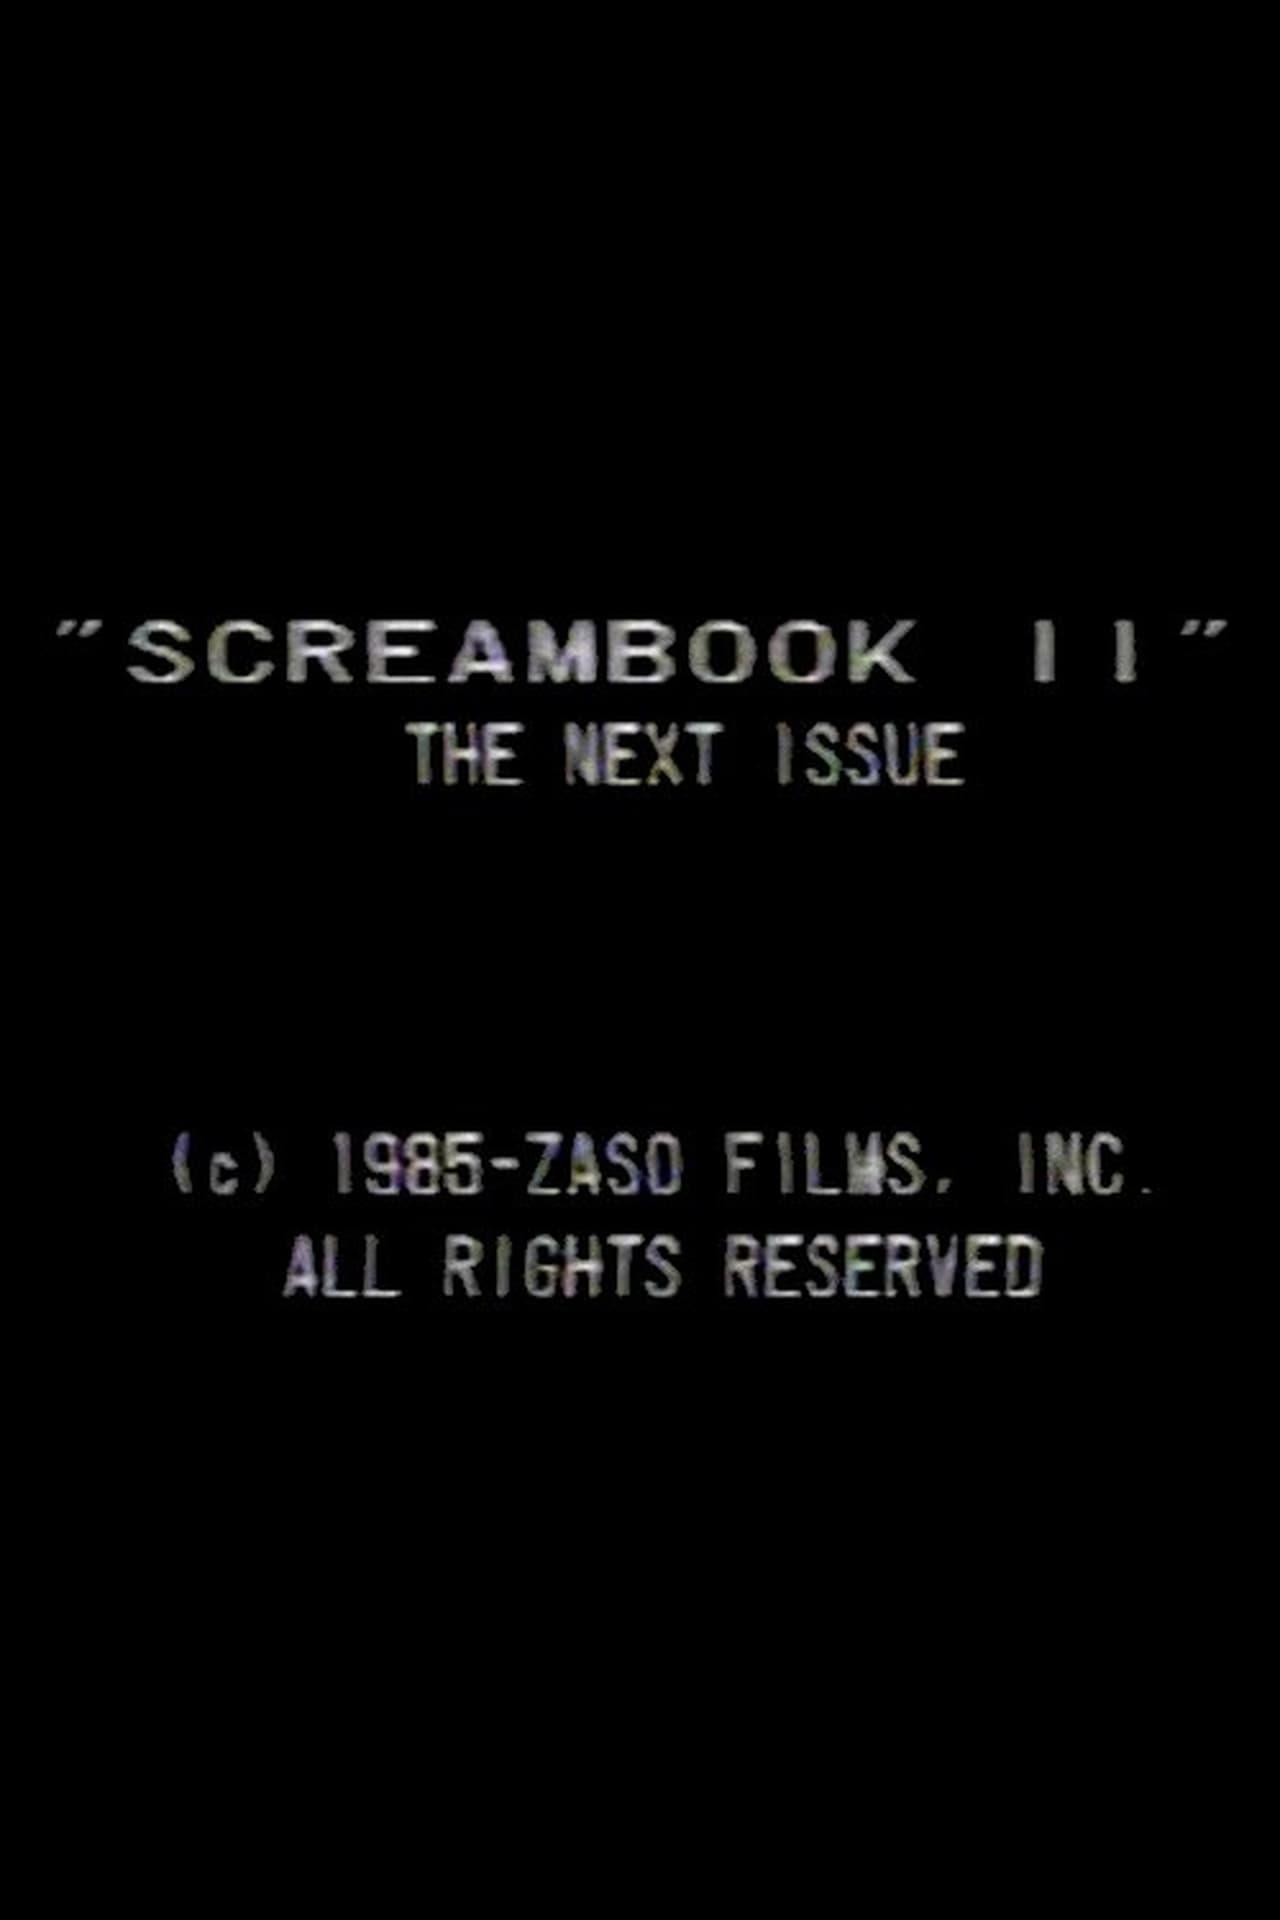 Screambook II poster